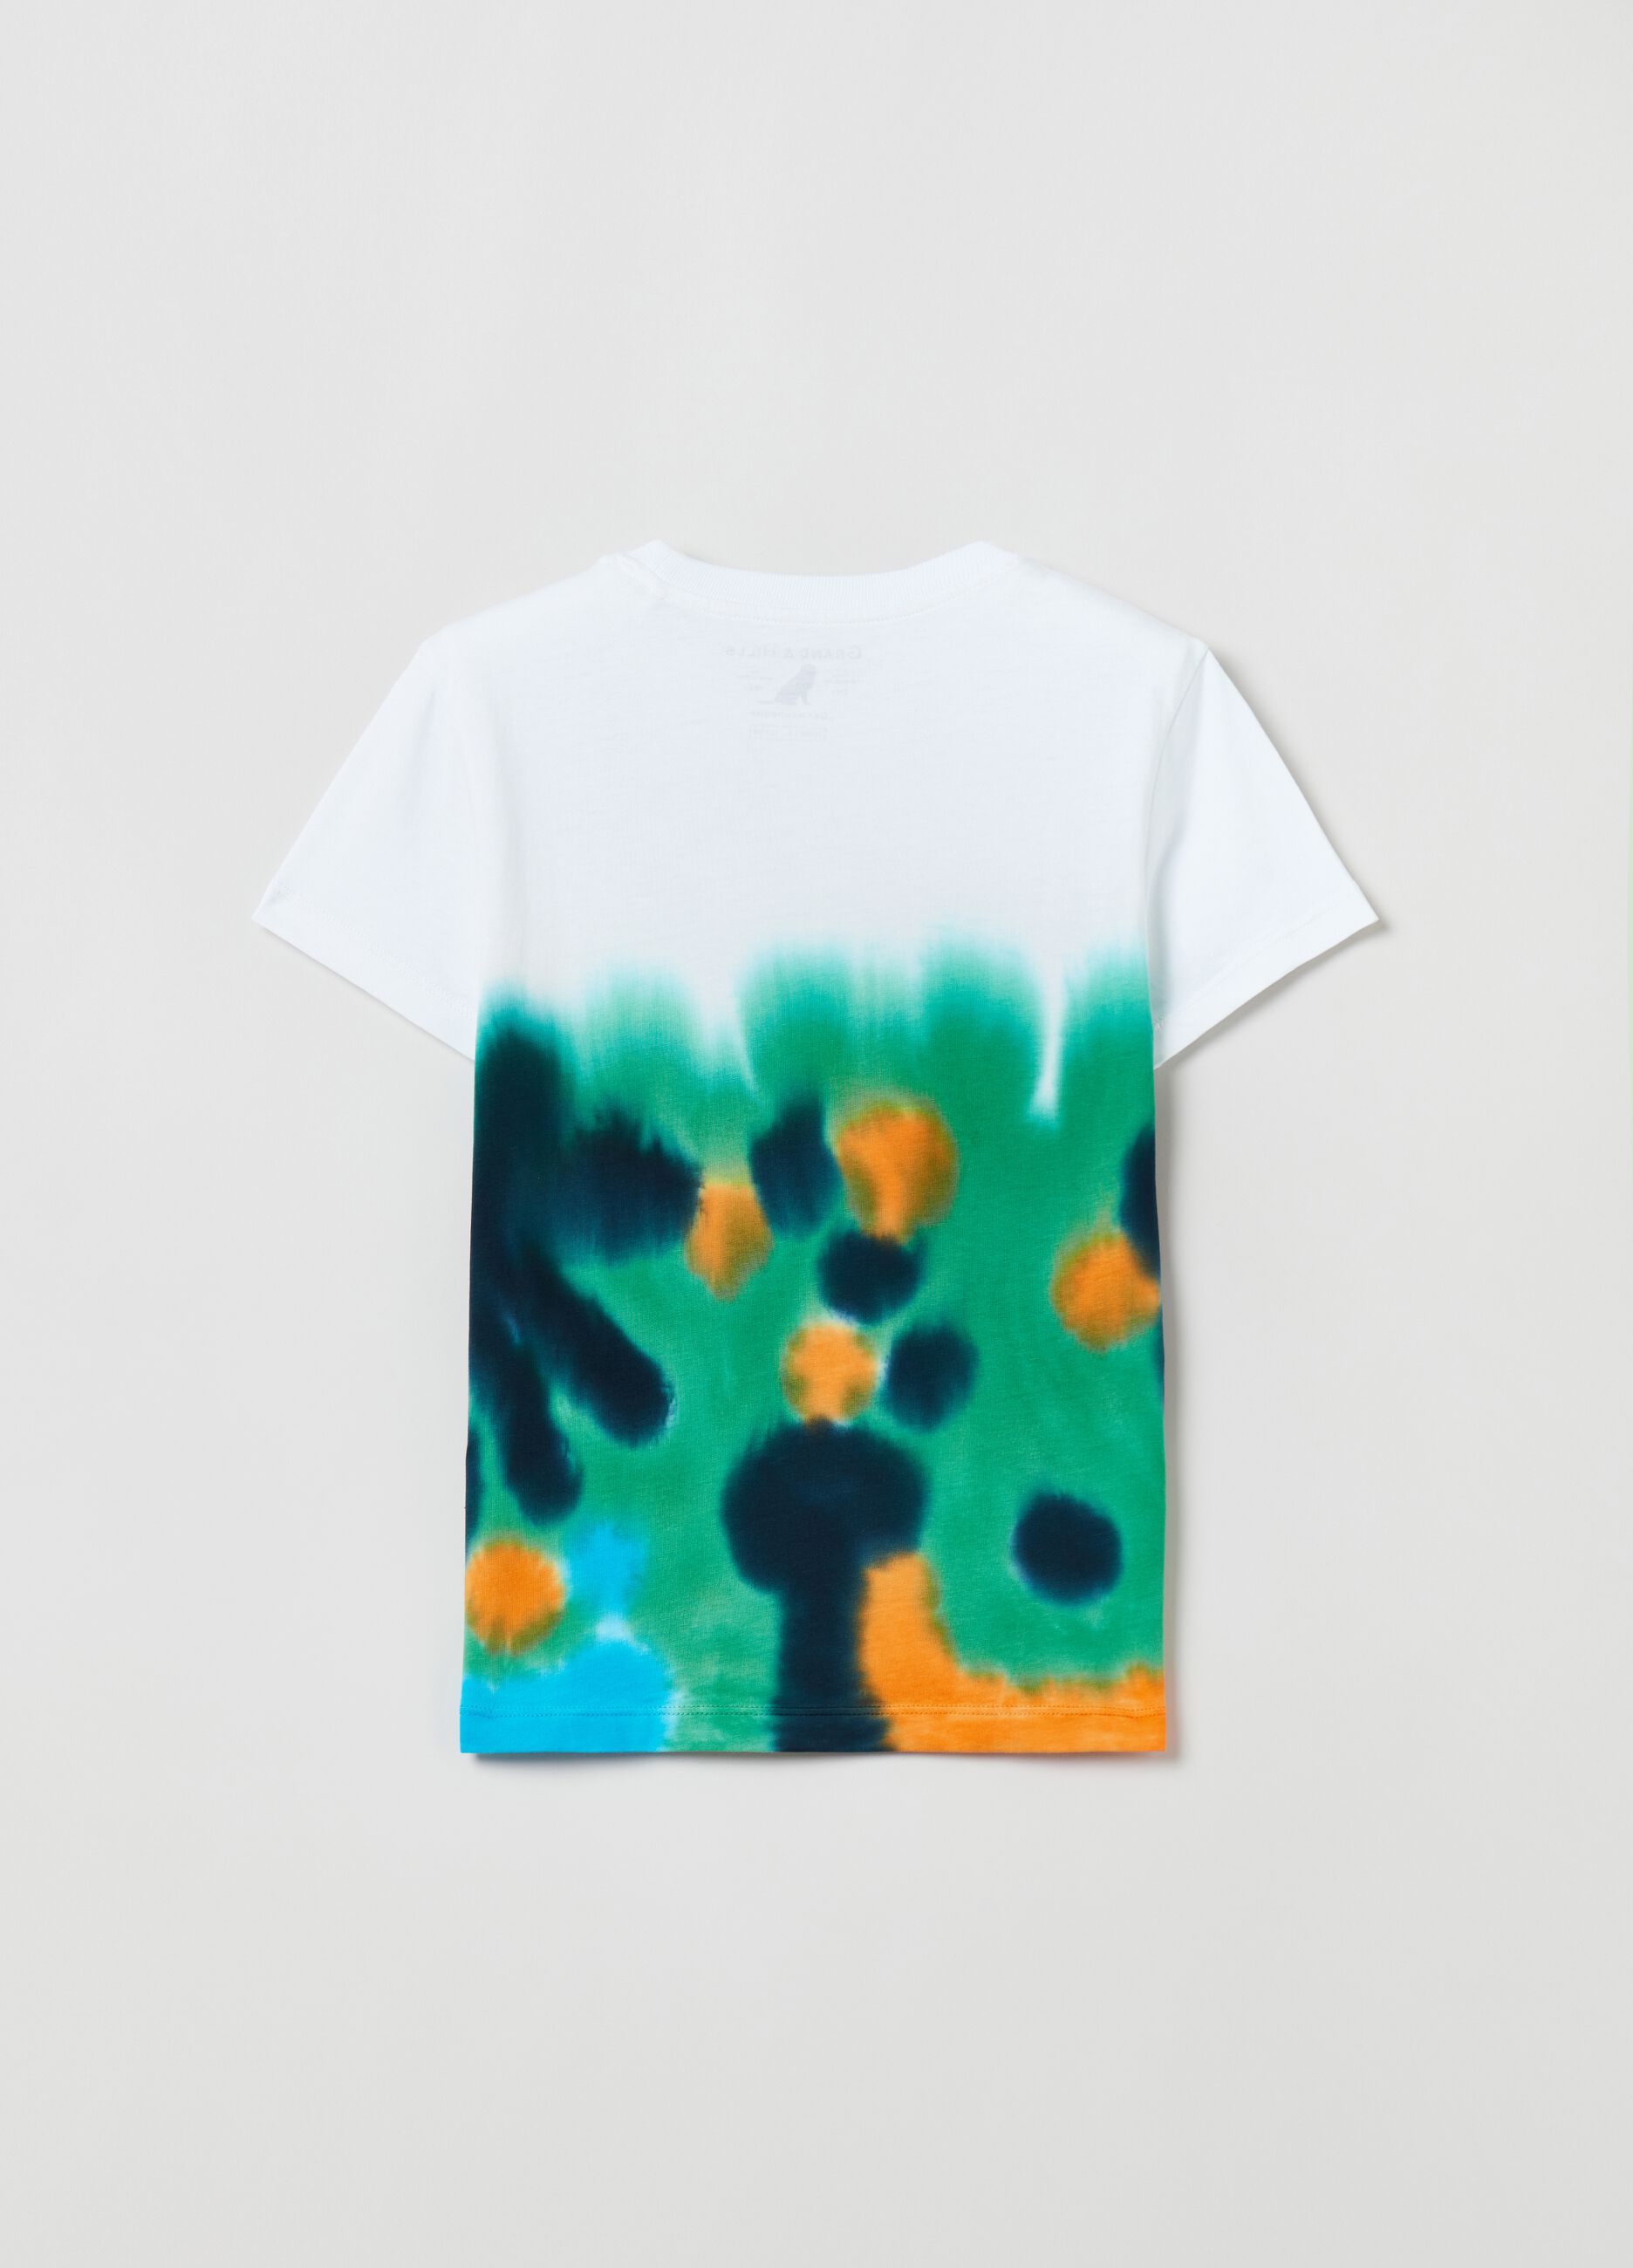 Tie-dye T-shirt with Grand&hills print